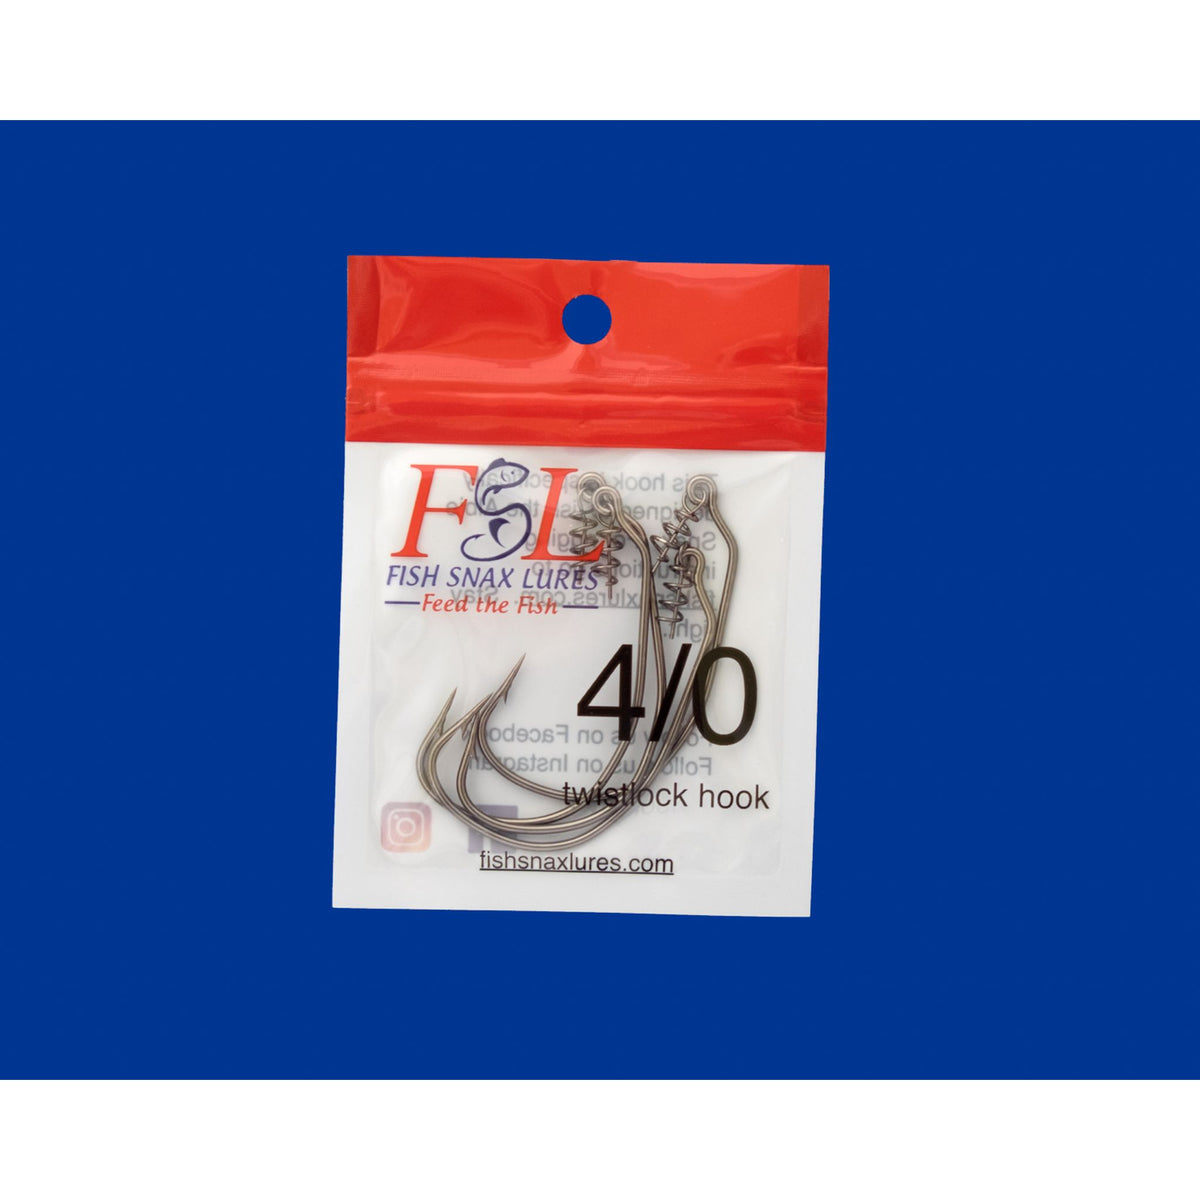 Fish Snax Lures Albie Snax 4/0 Twistlock Hooks (4 Pack)